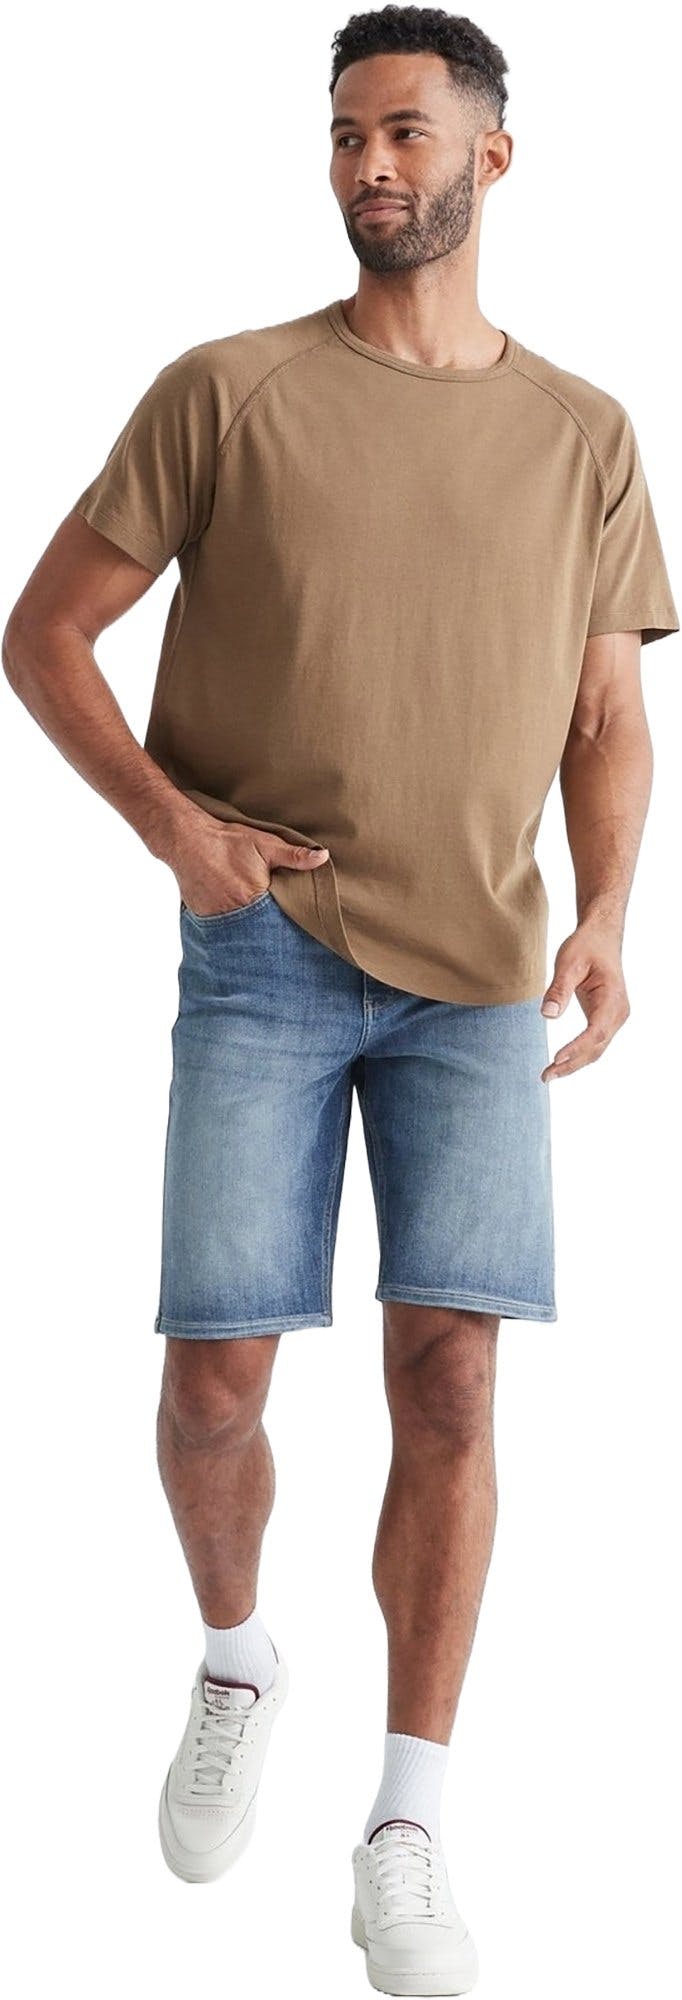 Product image for Performance Denim Short - Men's